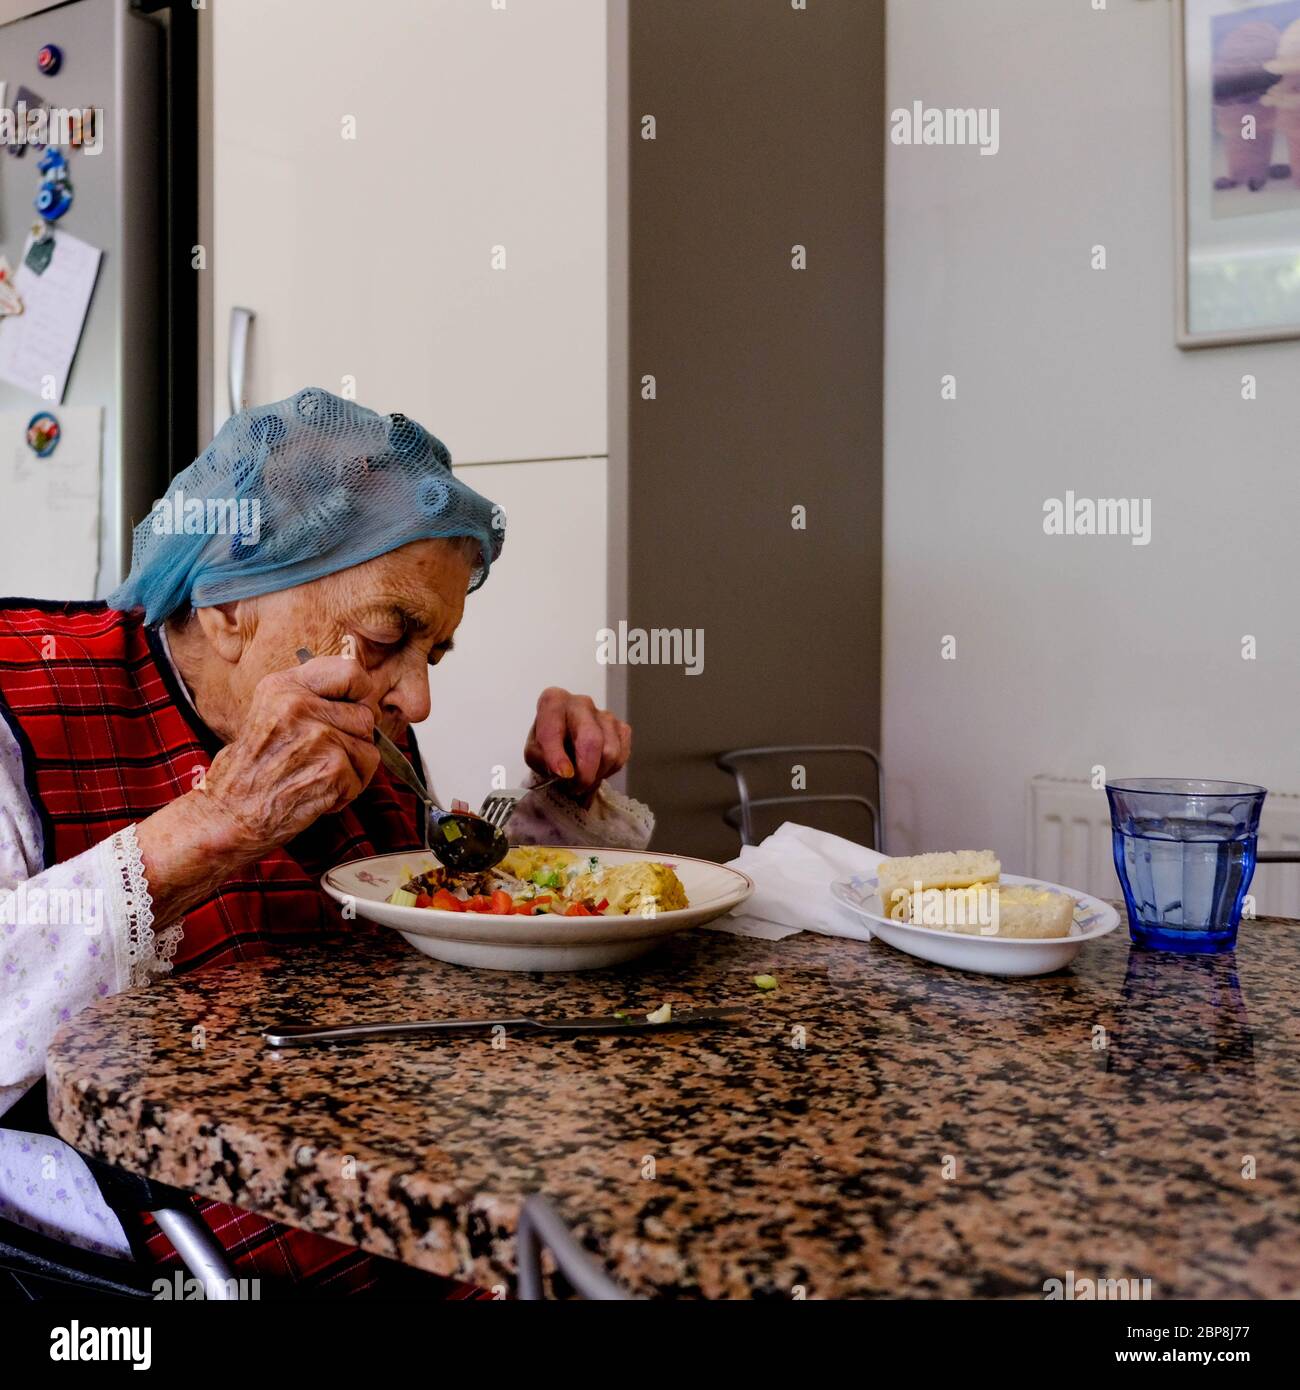 Elderly Woman Eating Alone, Self Isolating During The UK Coronavirus Lockdown, Eating A Meal Stock Photo